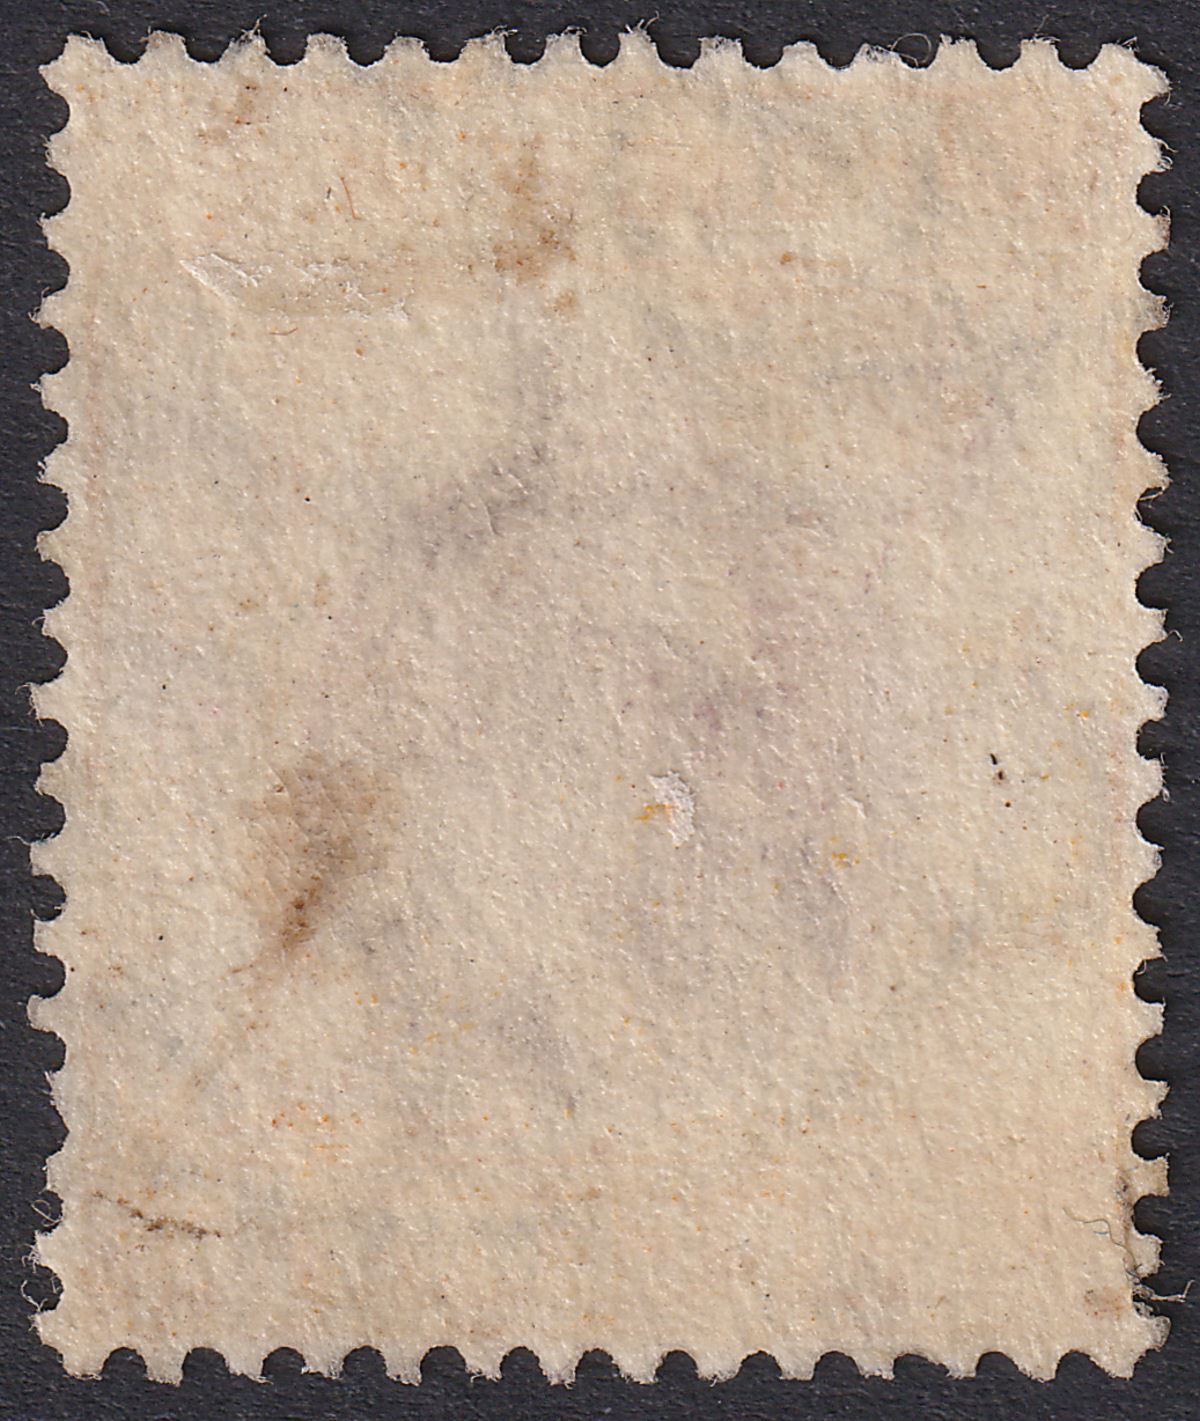 Hong Kong 1914 KEVII 30c Purple + Orange-Yellow Used AMOY postmark SG Z91 cat£95